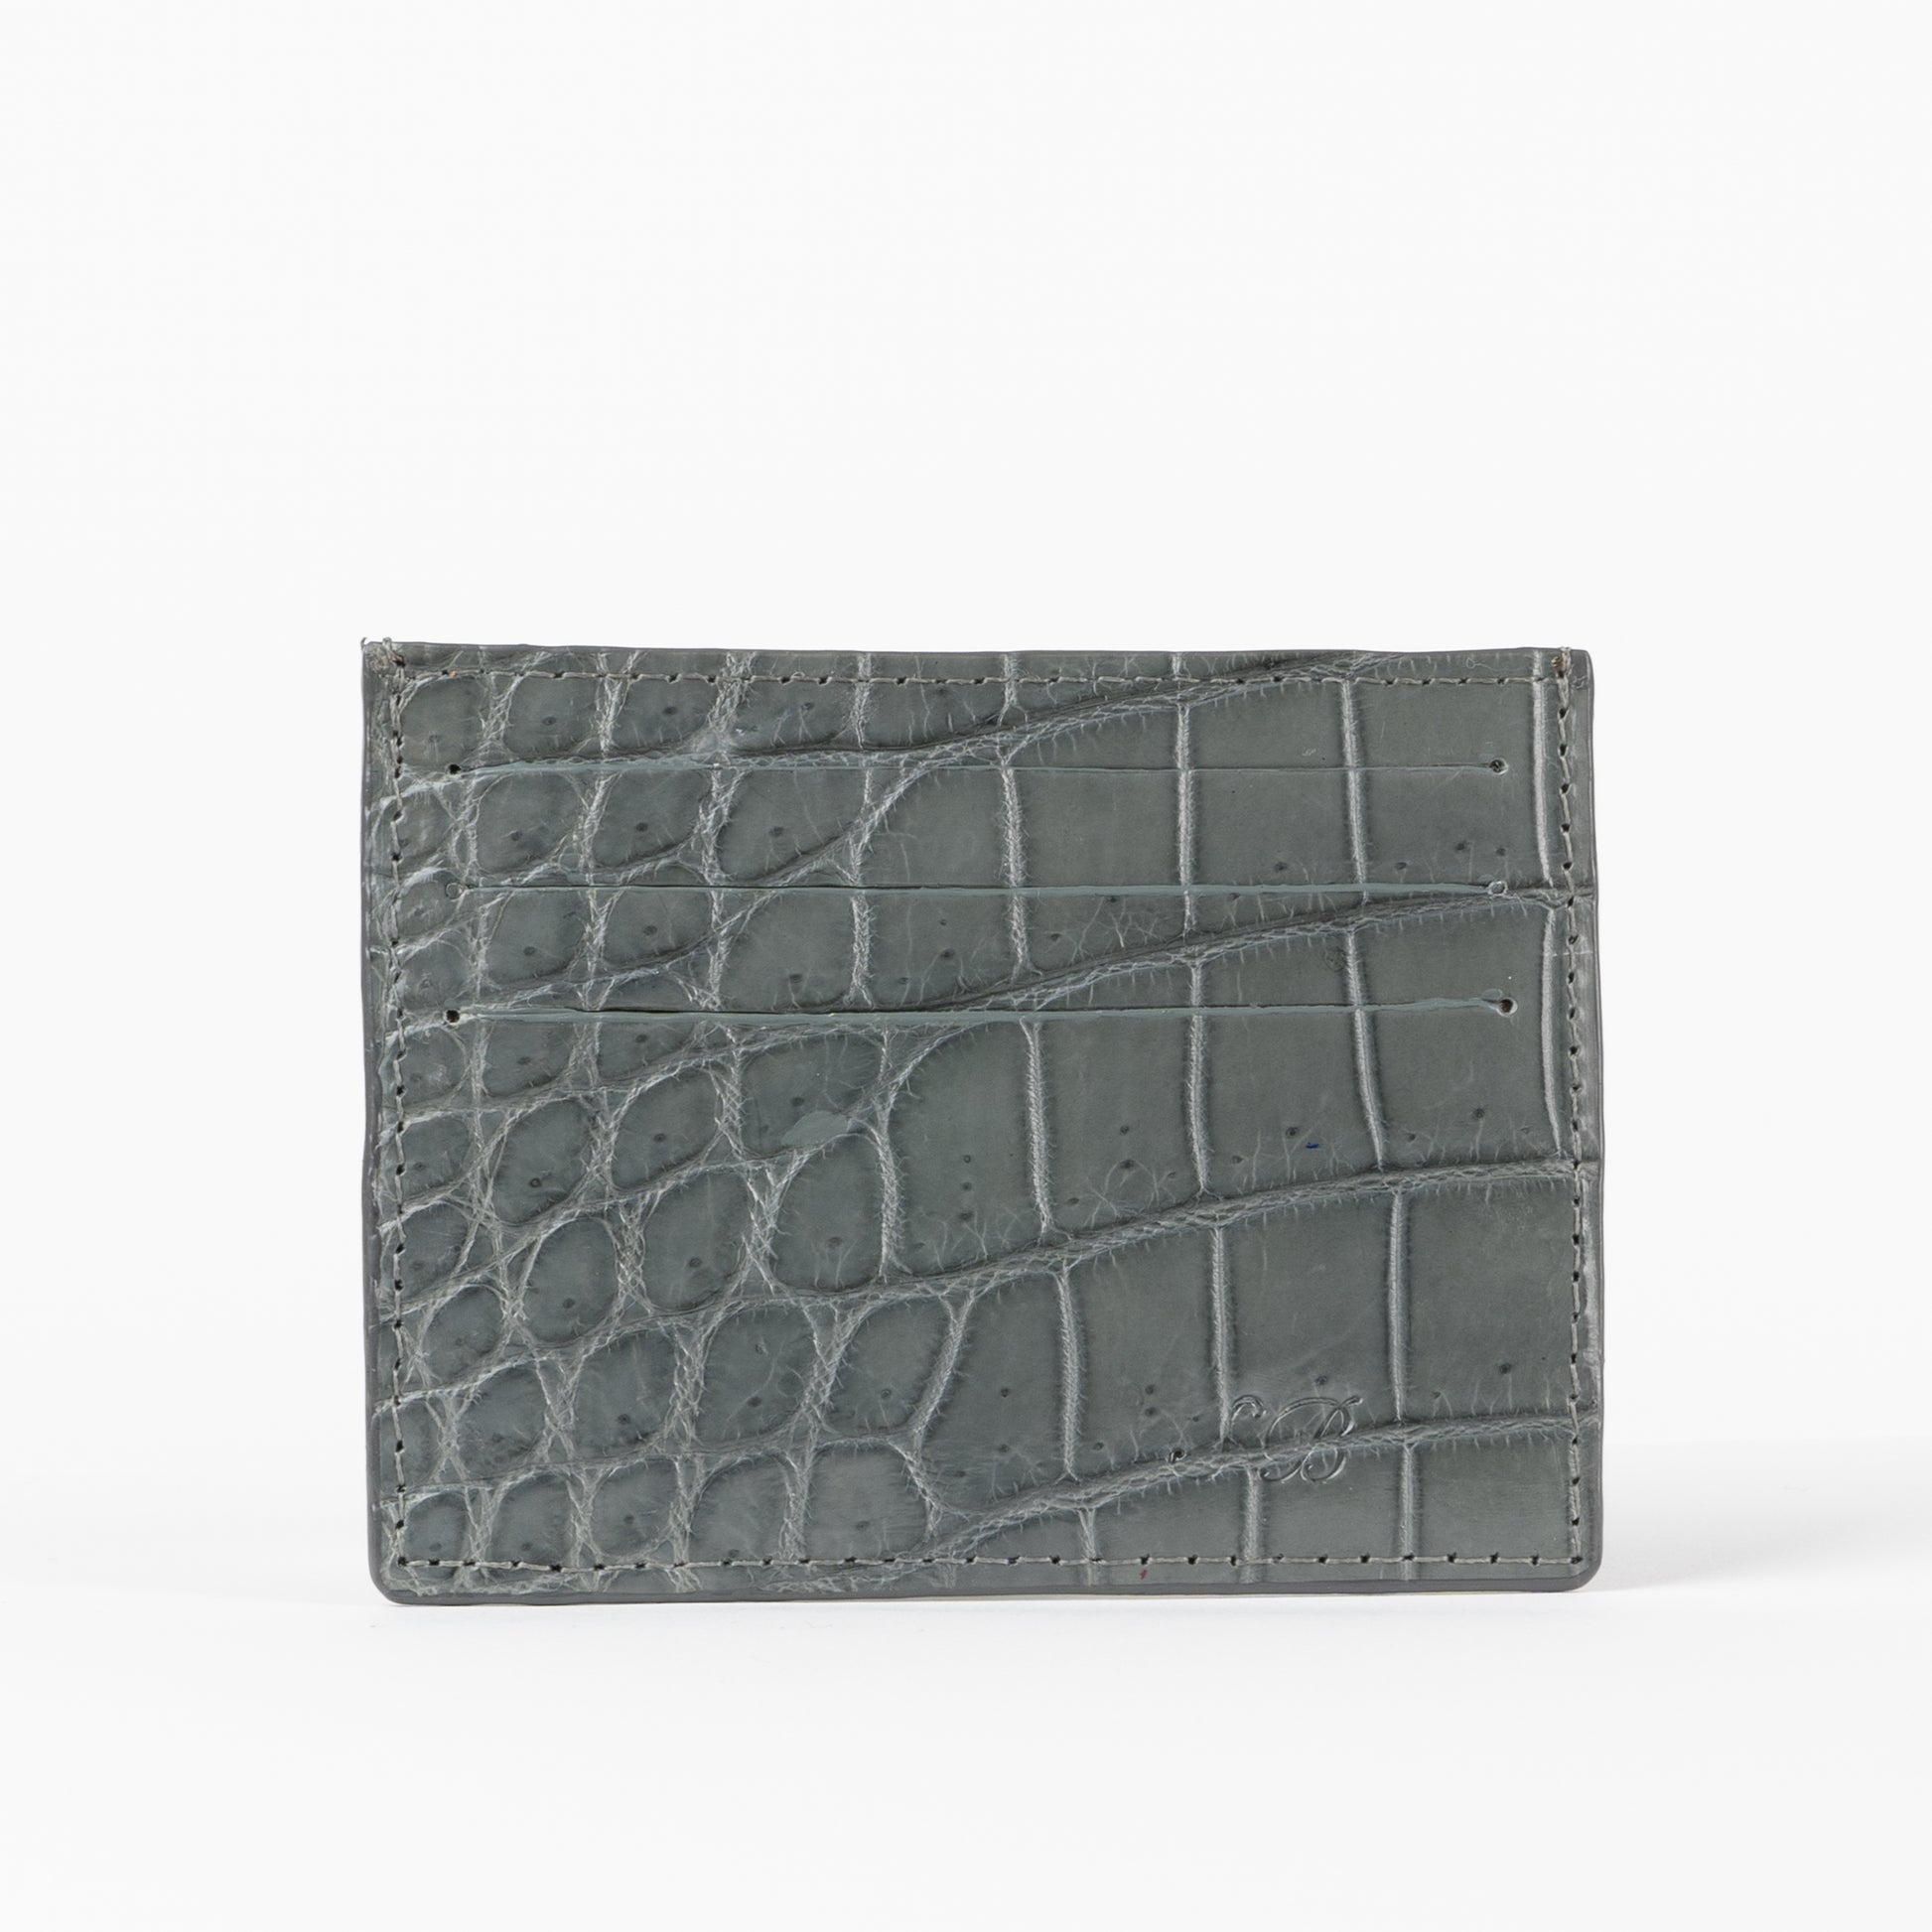 gray crocodile skin credit card case form sherrill bros